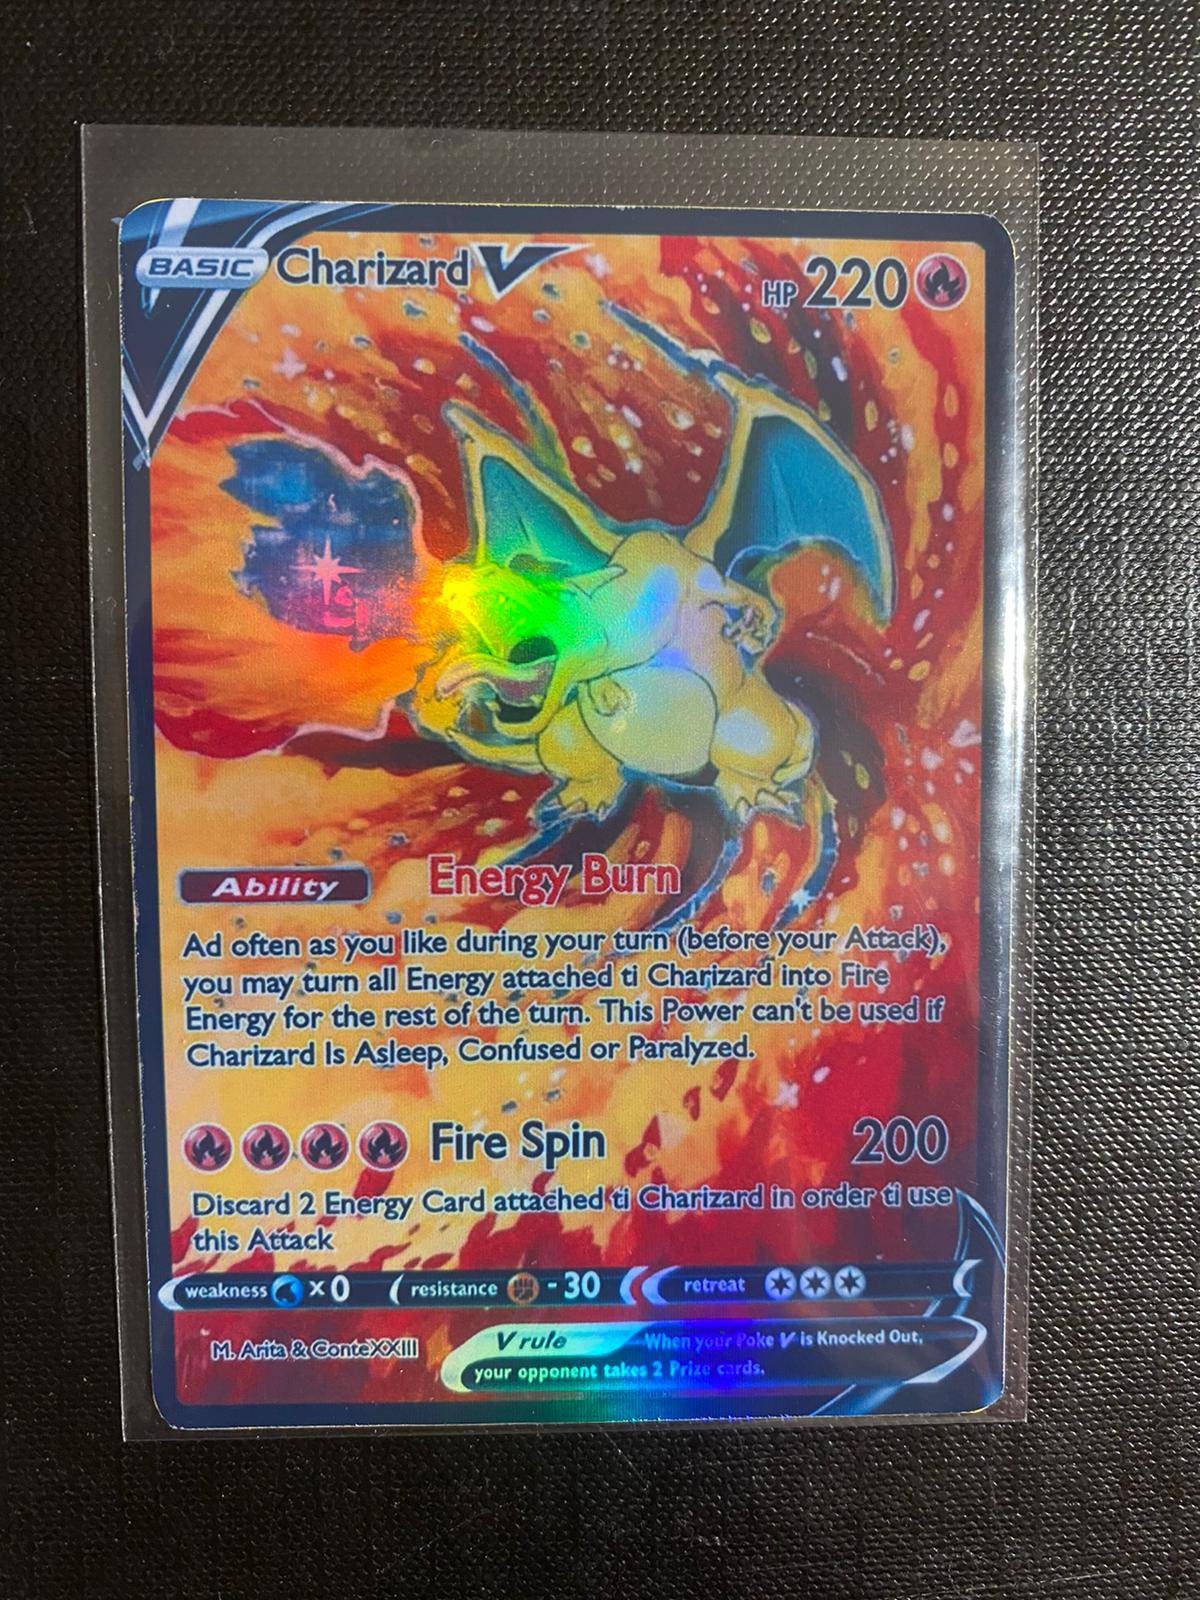 Rainbow Pokemon Cards in Spanish Shiny Vstar VMAX Holographic